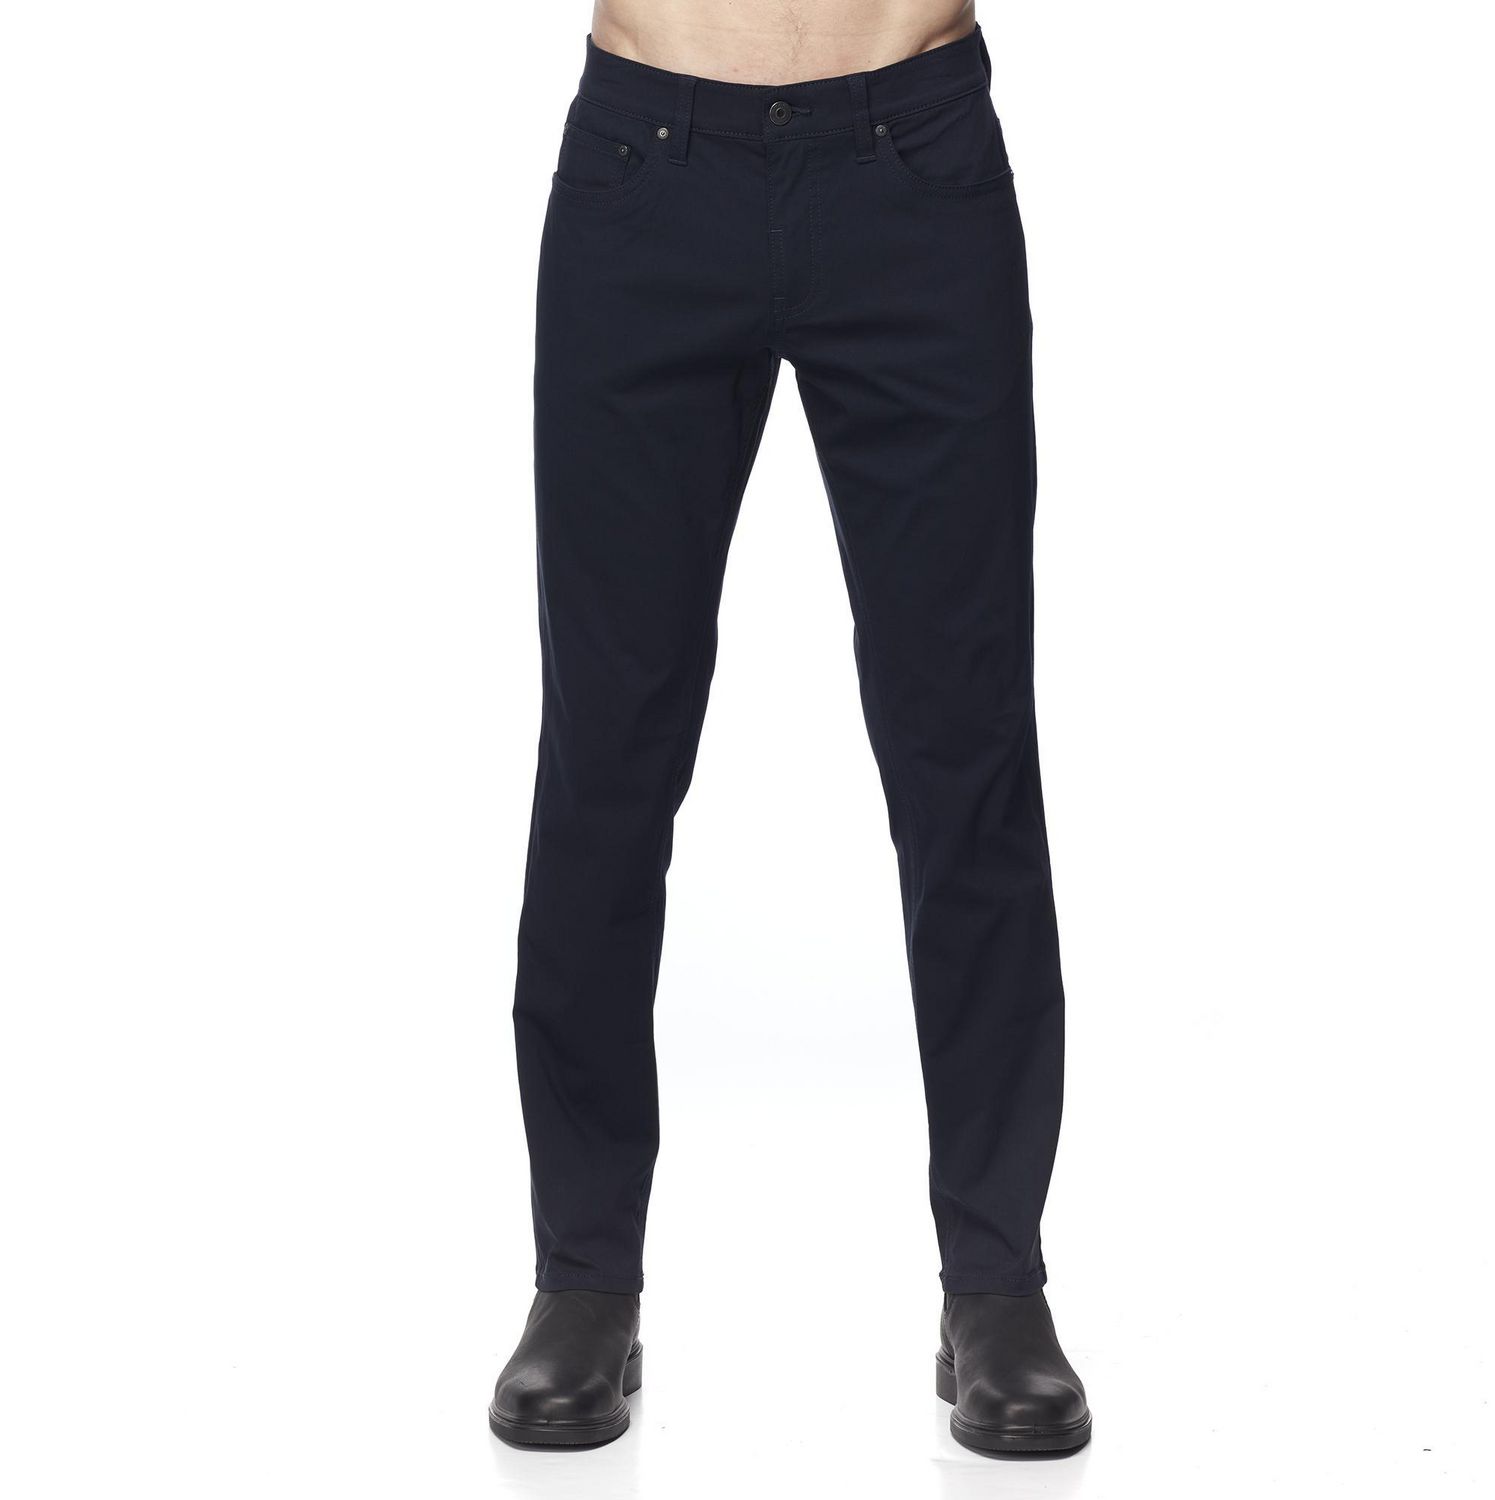 Dark Black Men's 5 Pocket Comfort Stretch Pant | Walmart Canada